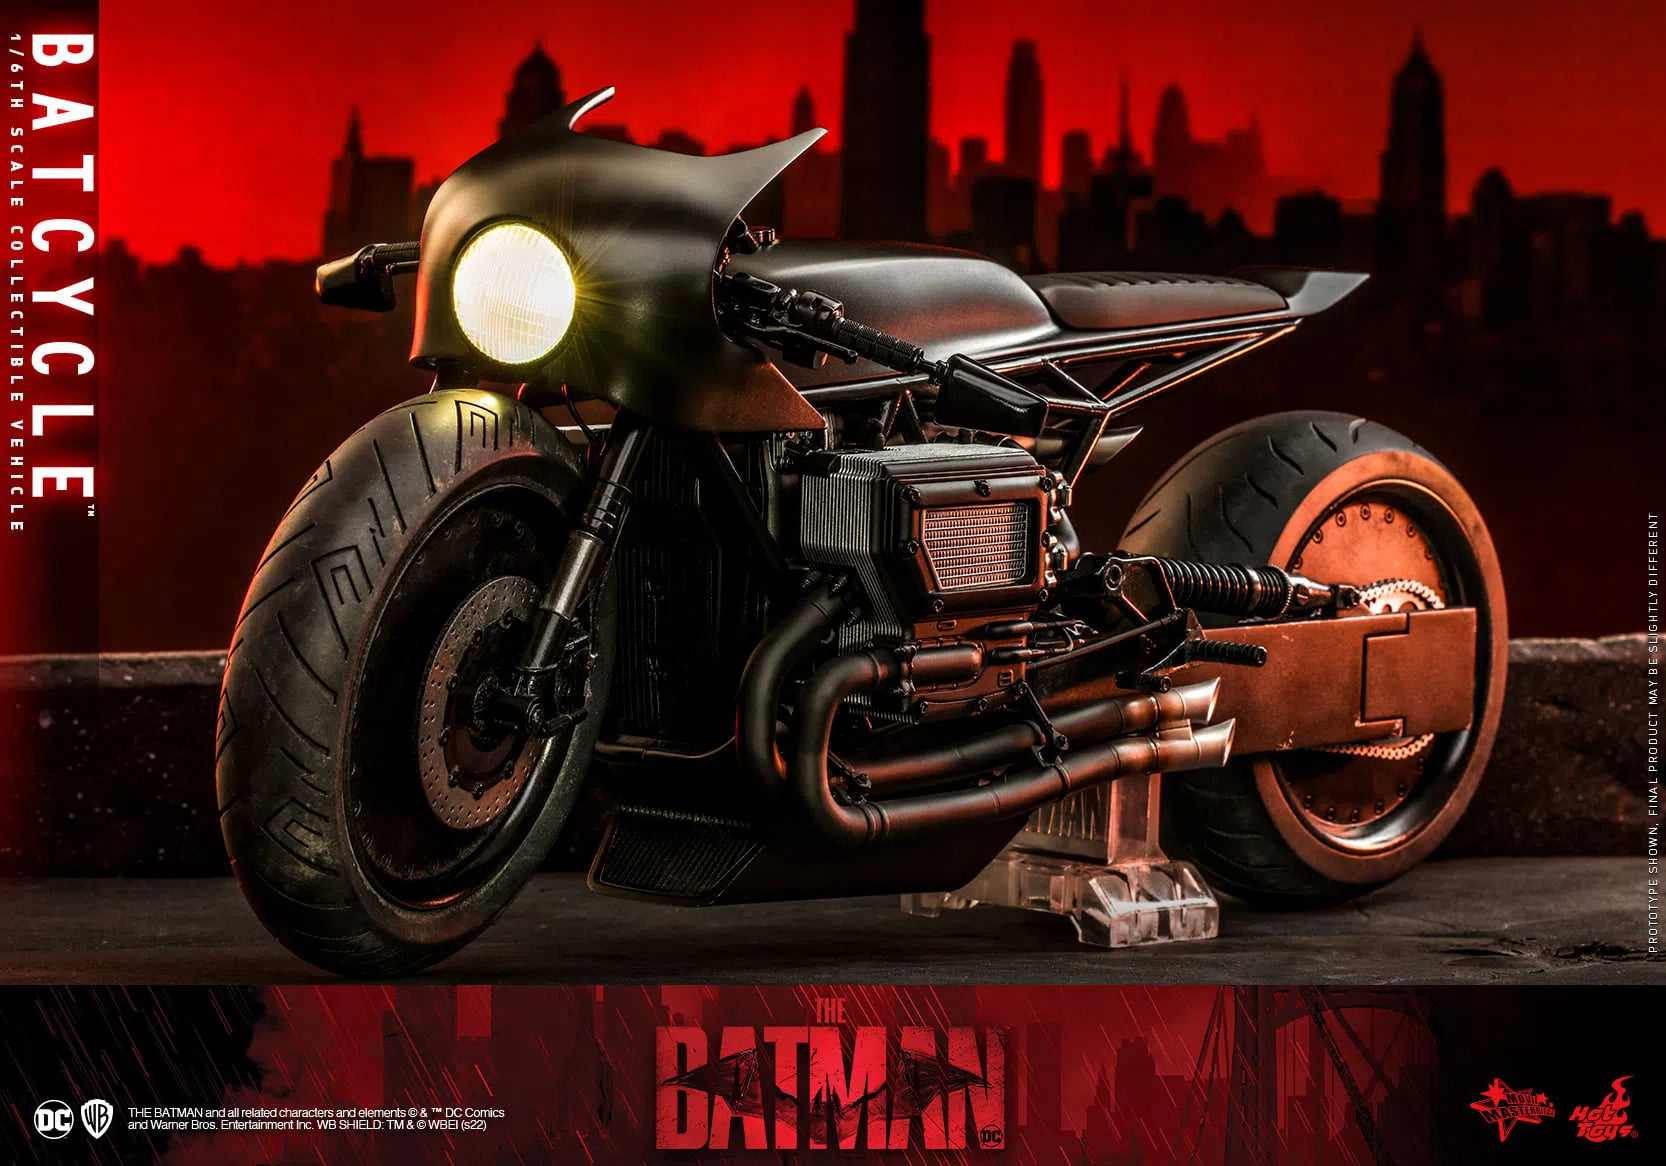 Batcycle: The Batman: DC Comics: MMS642 Hot Toys